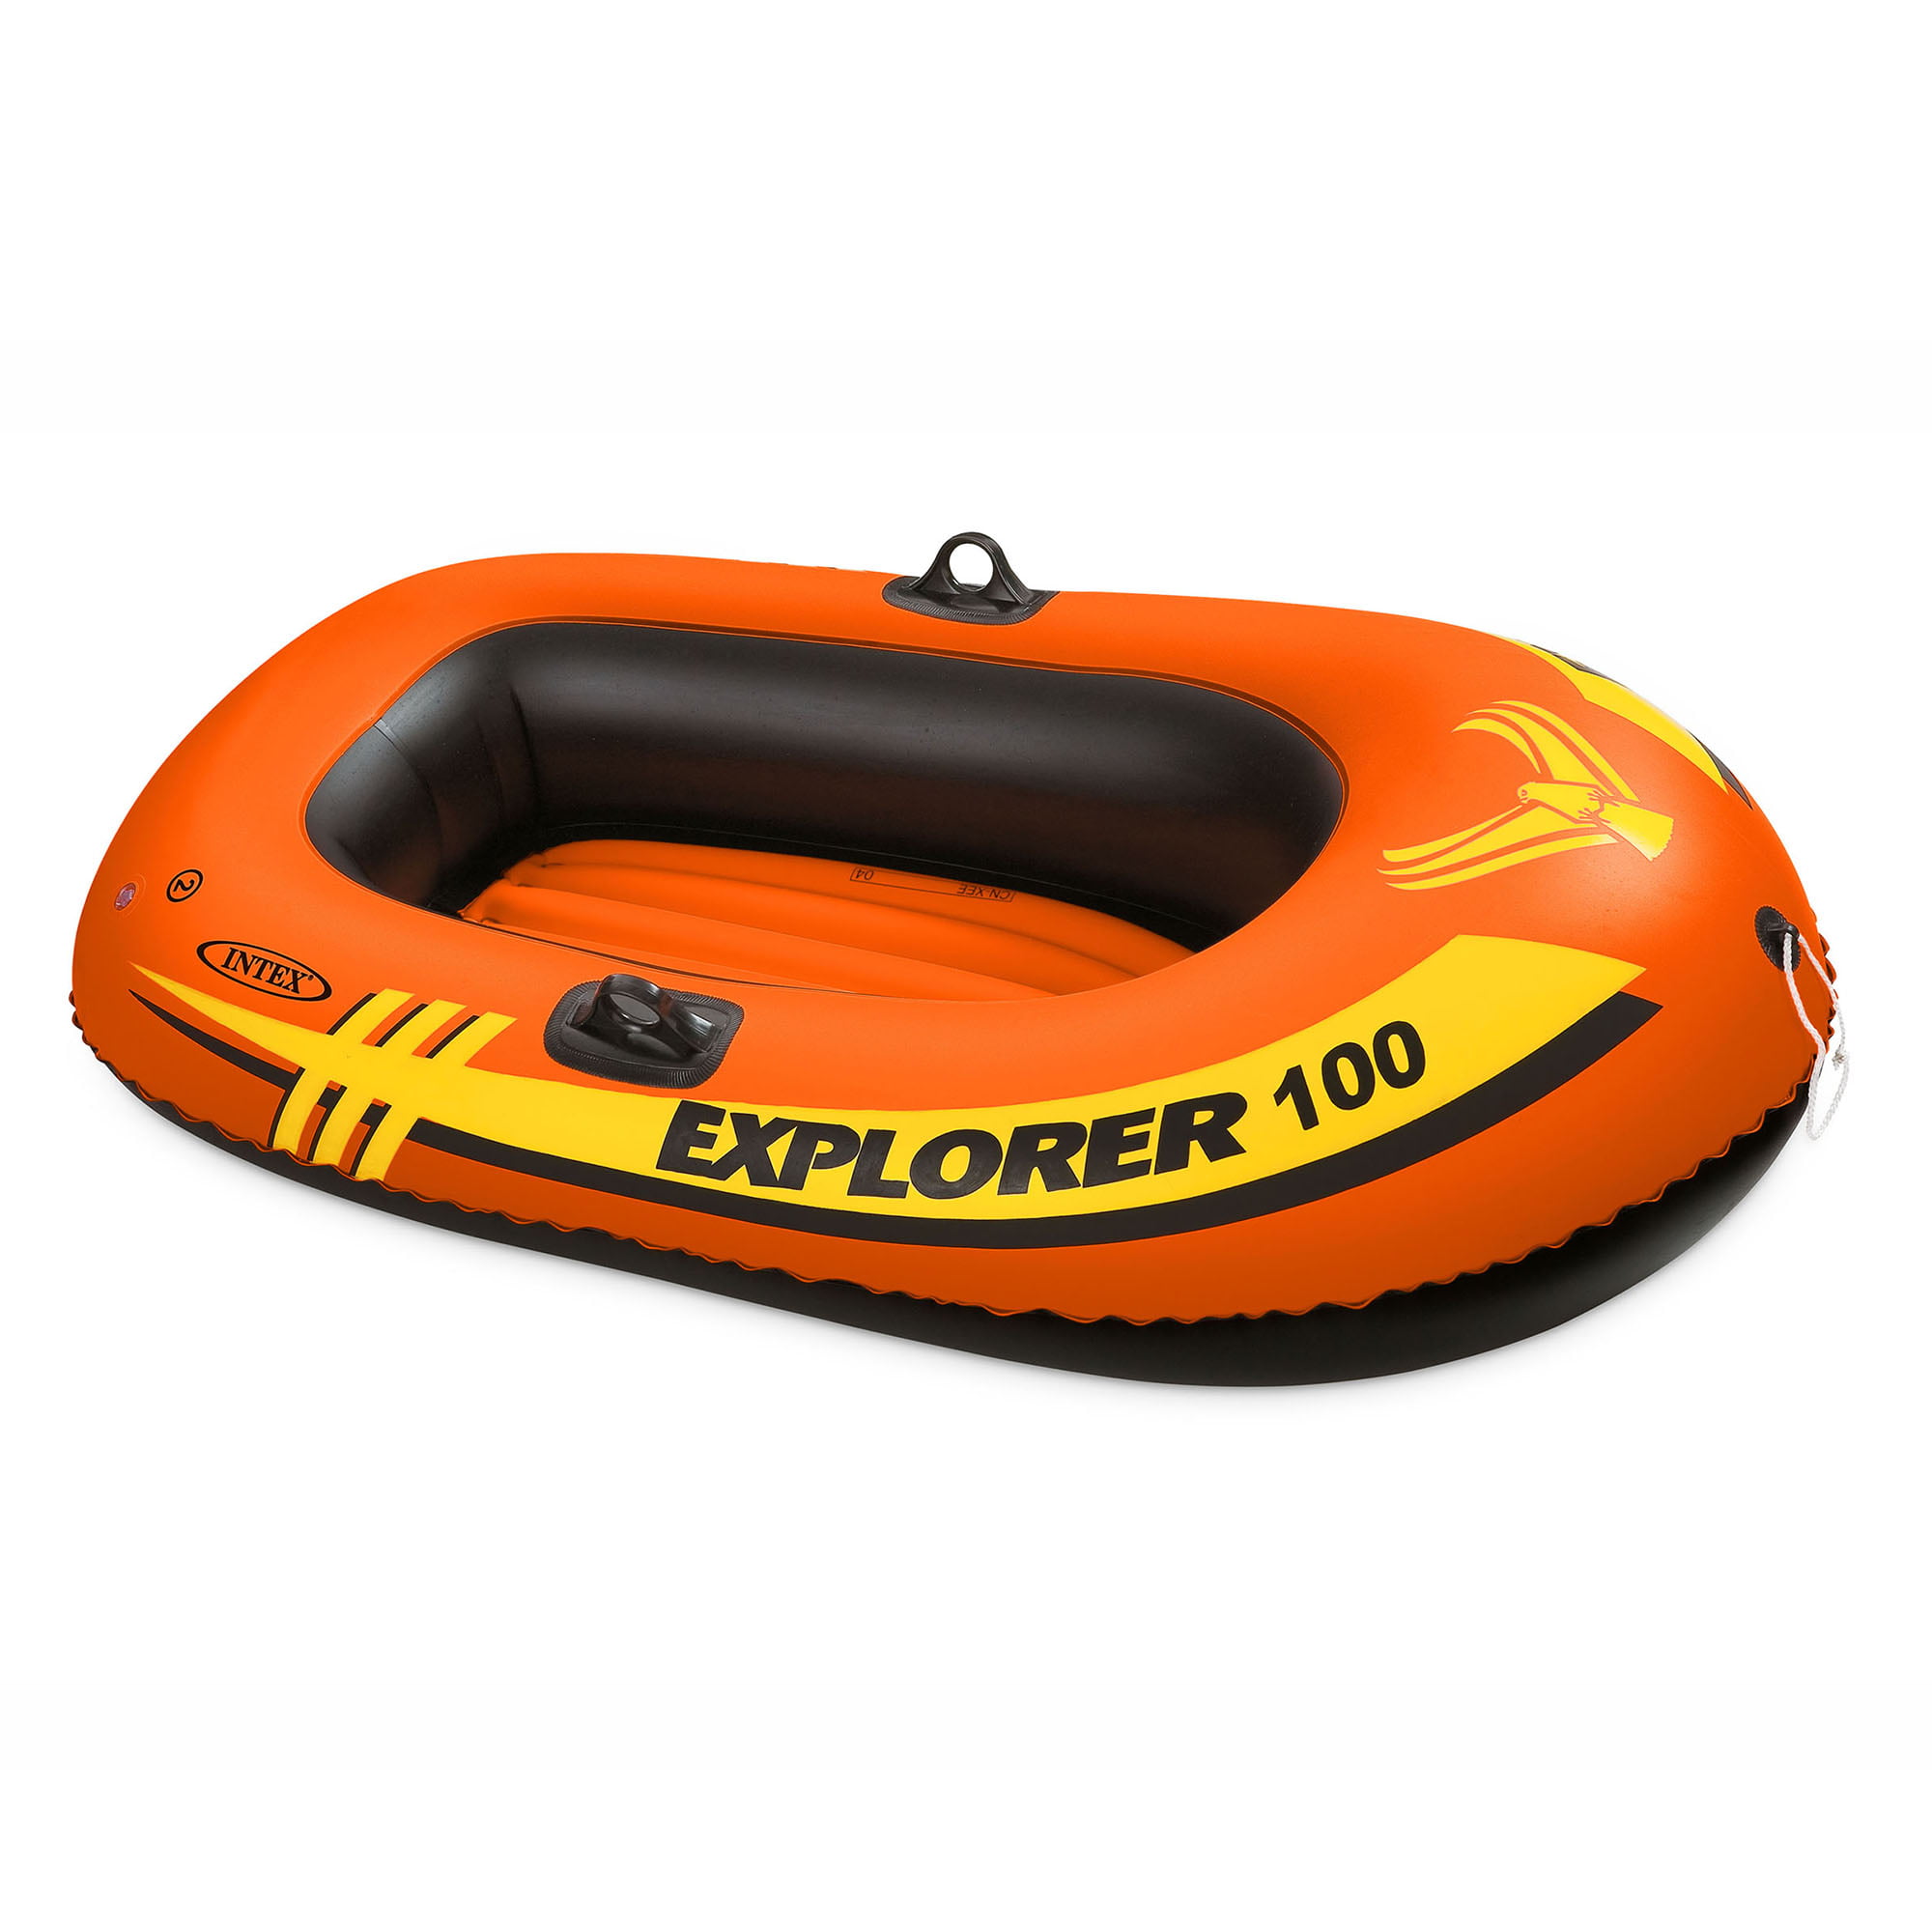 2 Oars Kayak River Rafting Beach Pump Pathfinder 4 Person Inflatable Raft Boat 